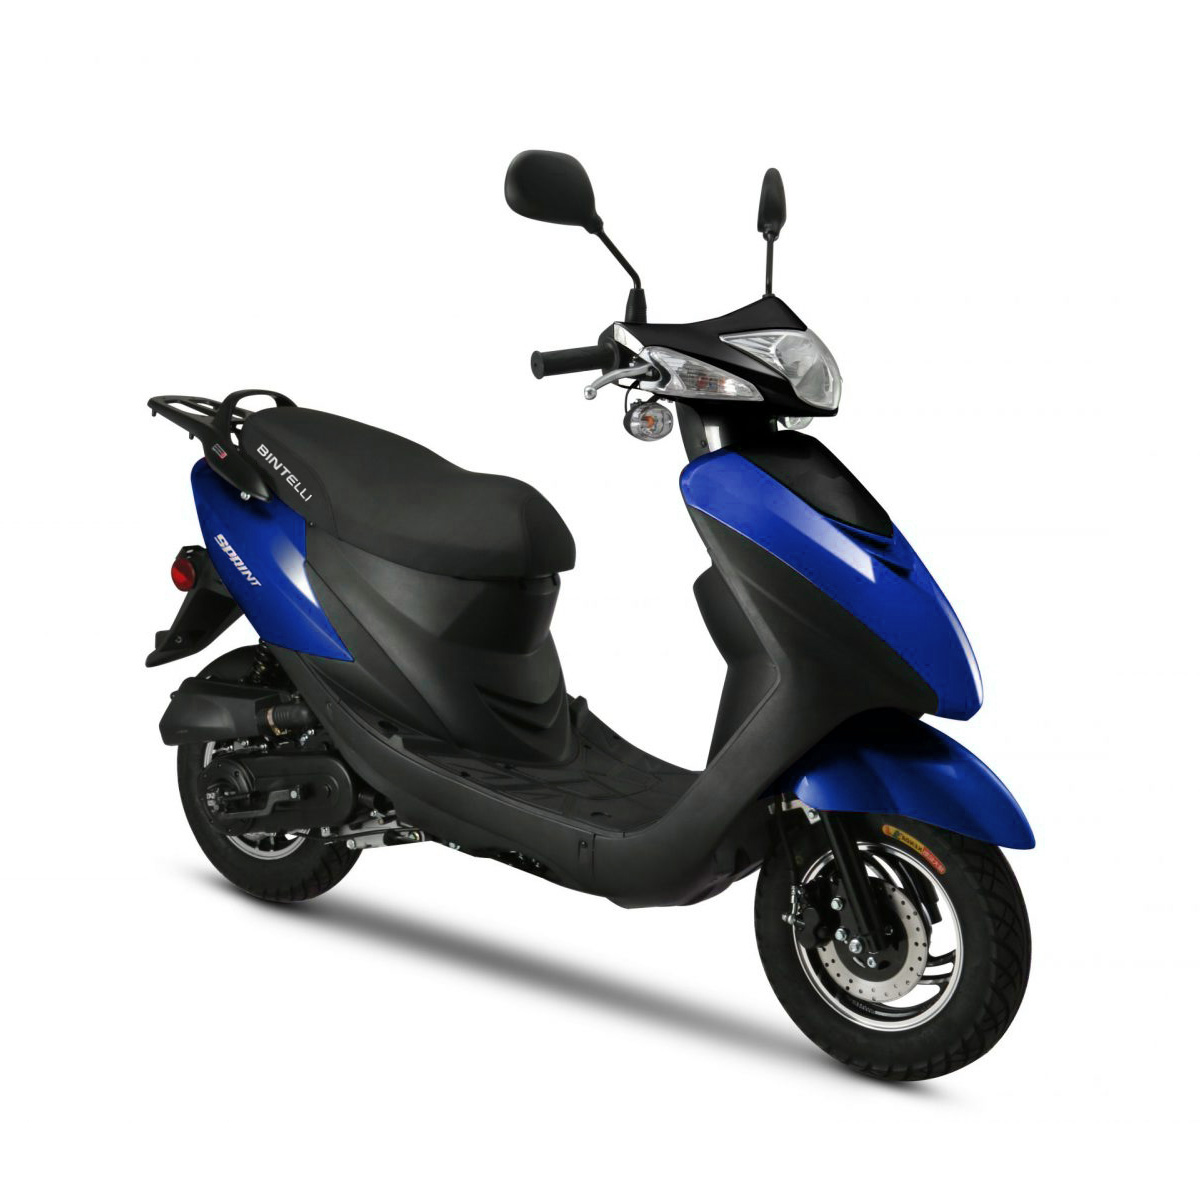 Bintelli Sprint Scooter in Blue Color